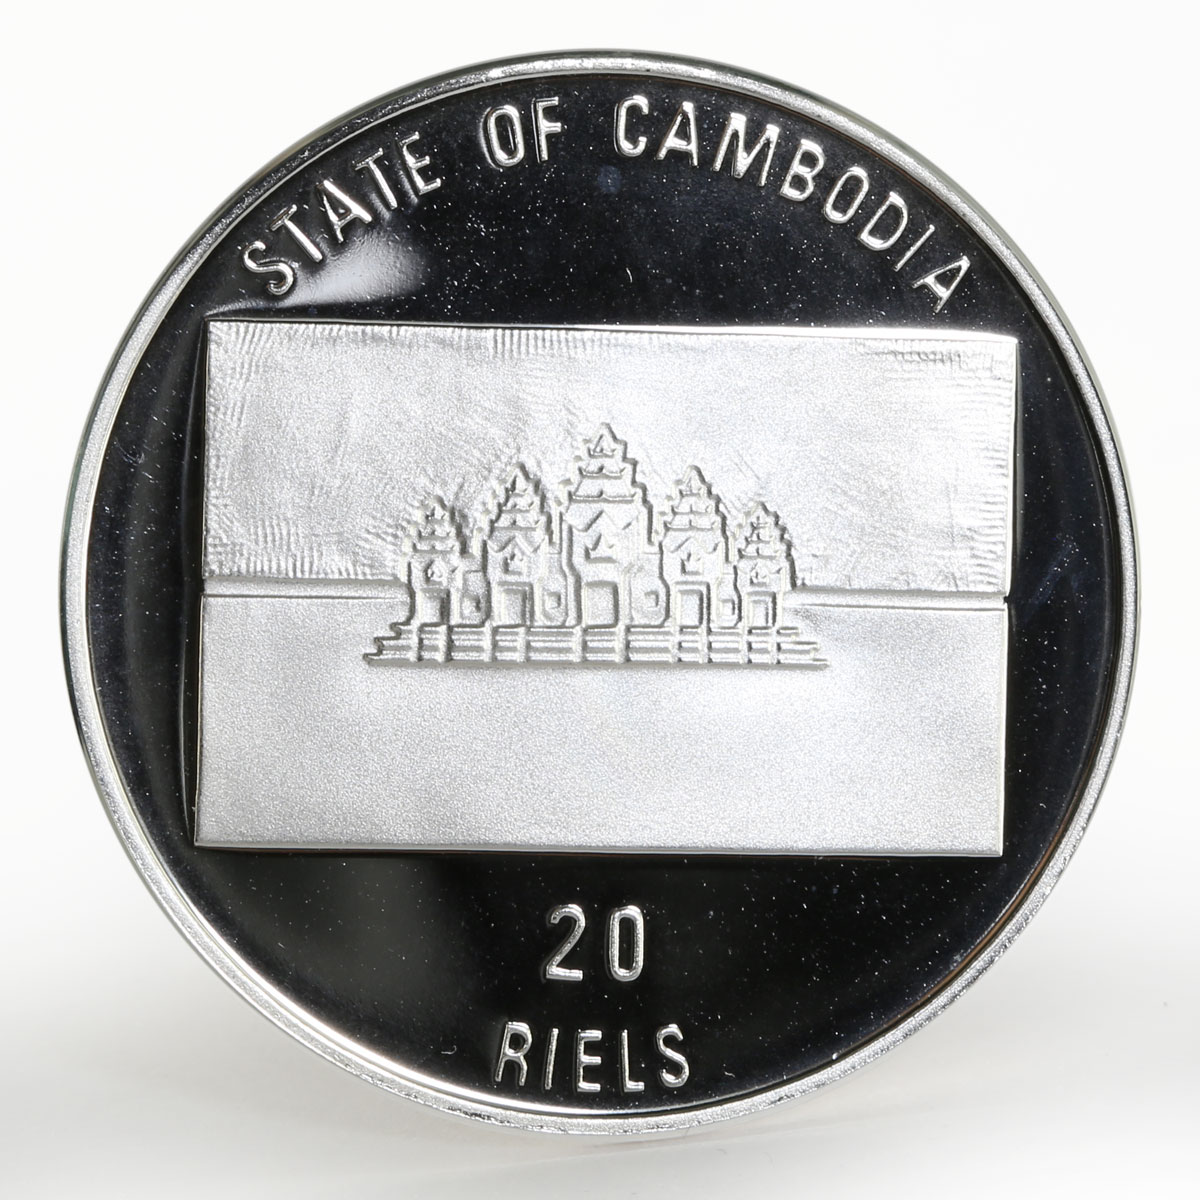 Cambodia 20 riels Prehistoric Animals series Monoclonius proof silver coin 1995